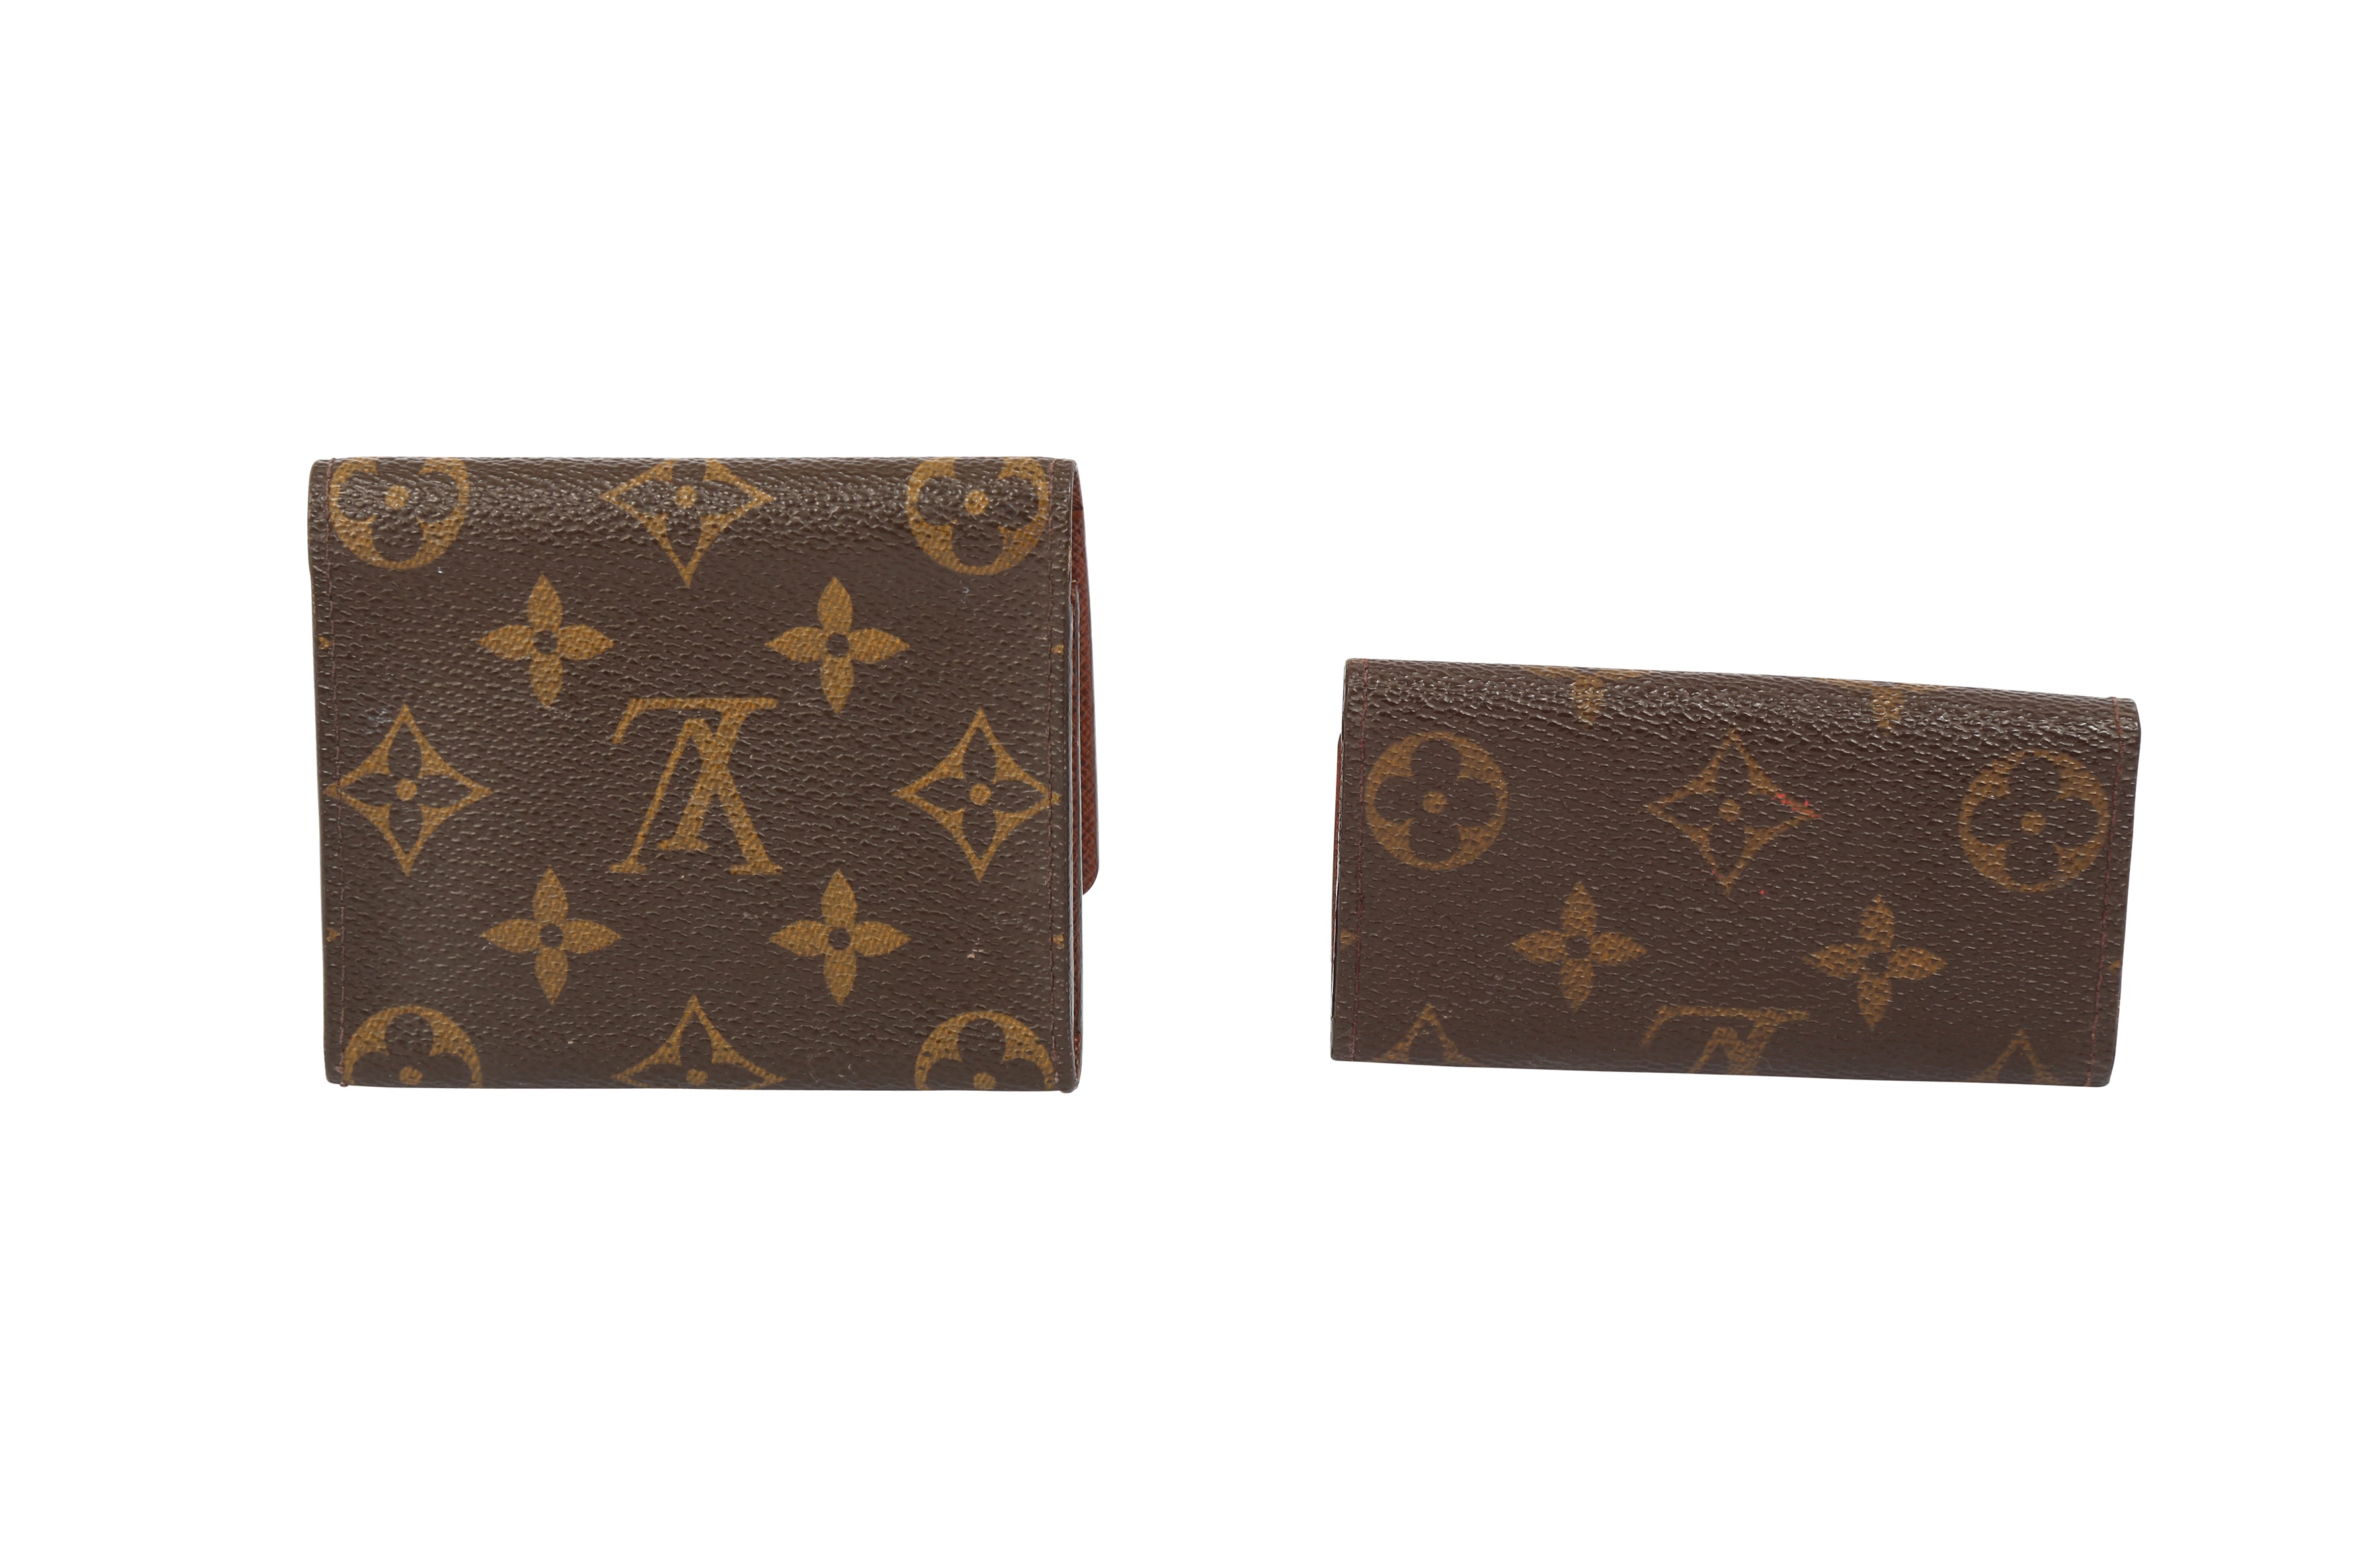 Lot 260 - Louis Vuitton Monogram Key Holder and Card